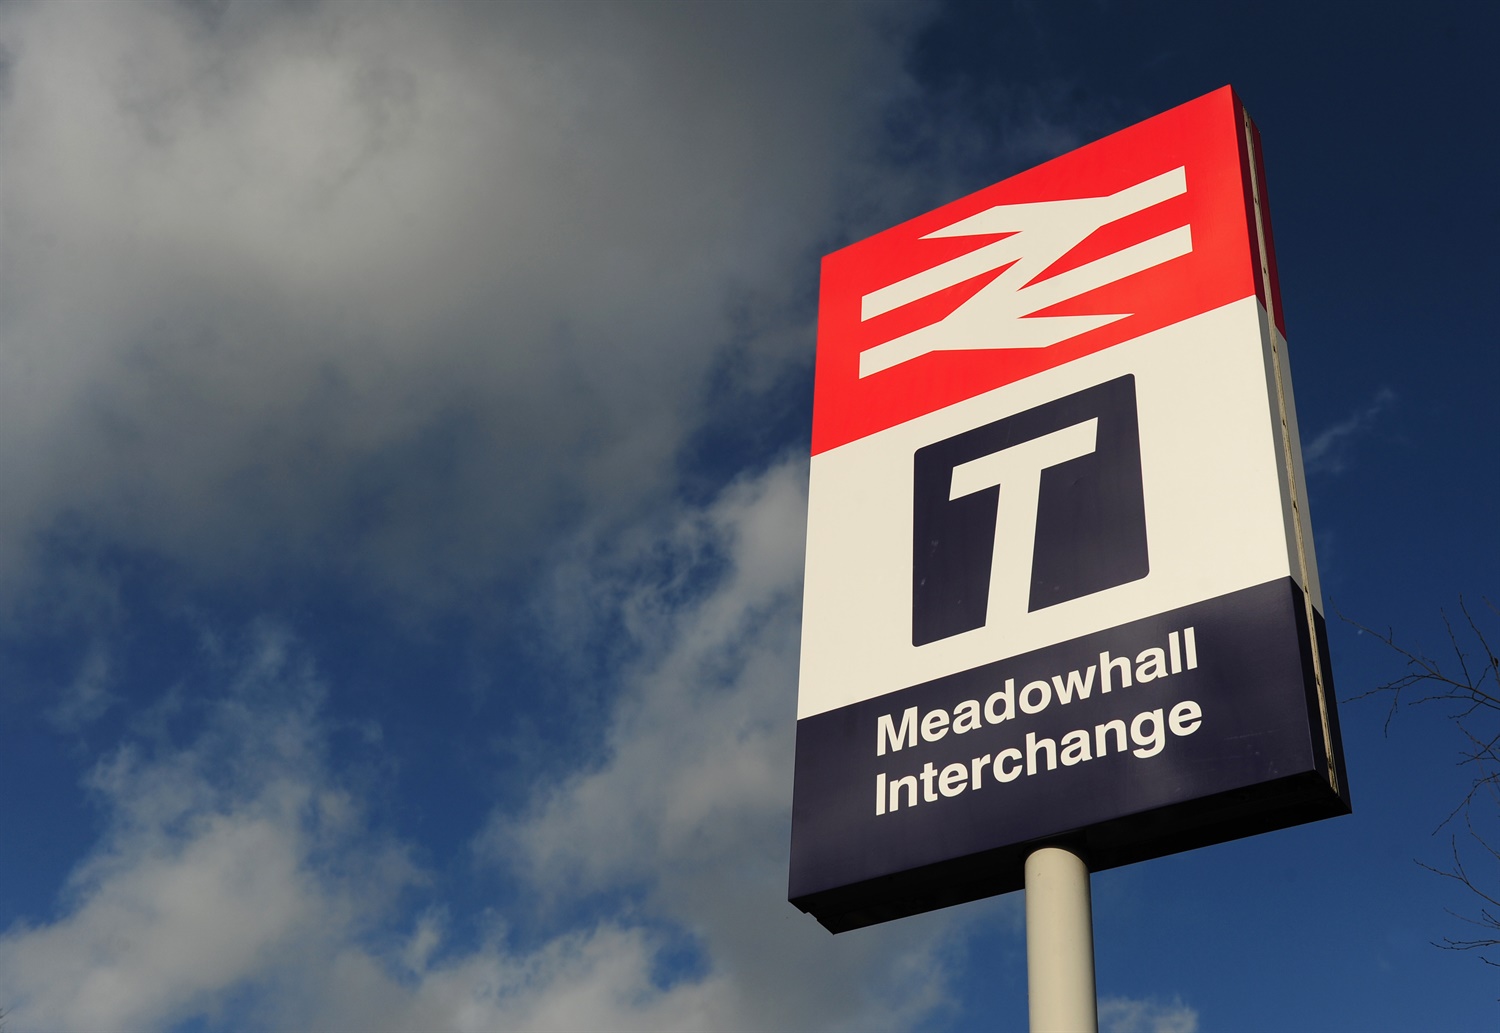 Sheffield Meadowhall interchange